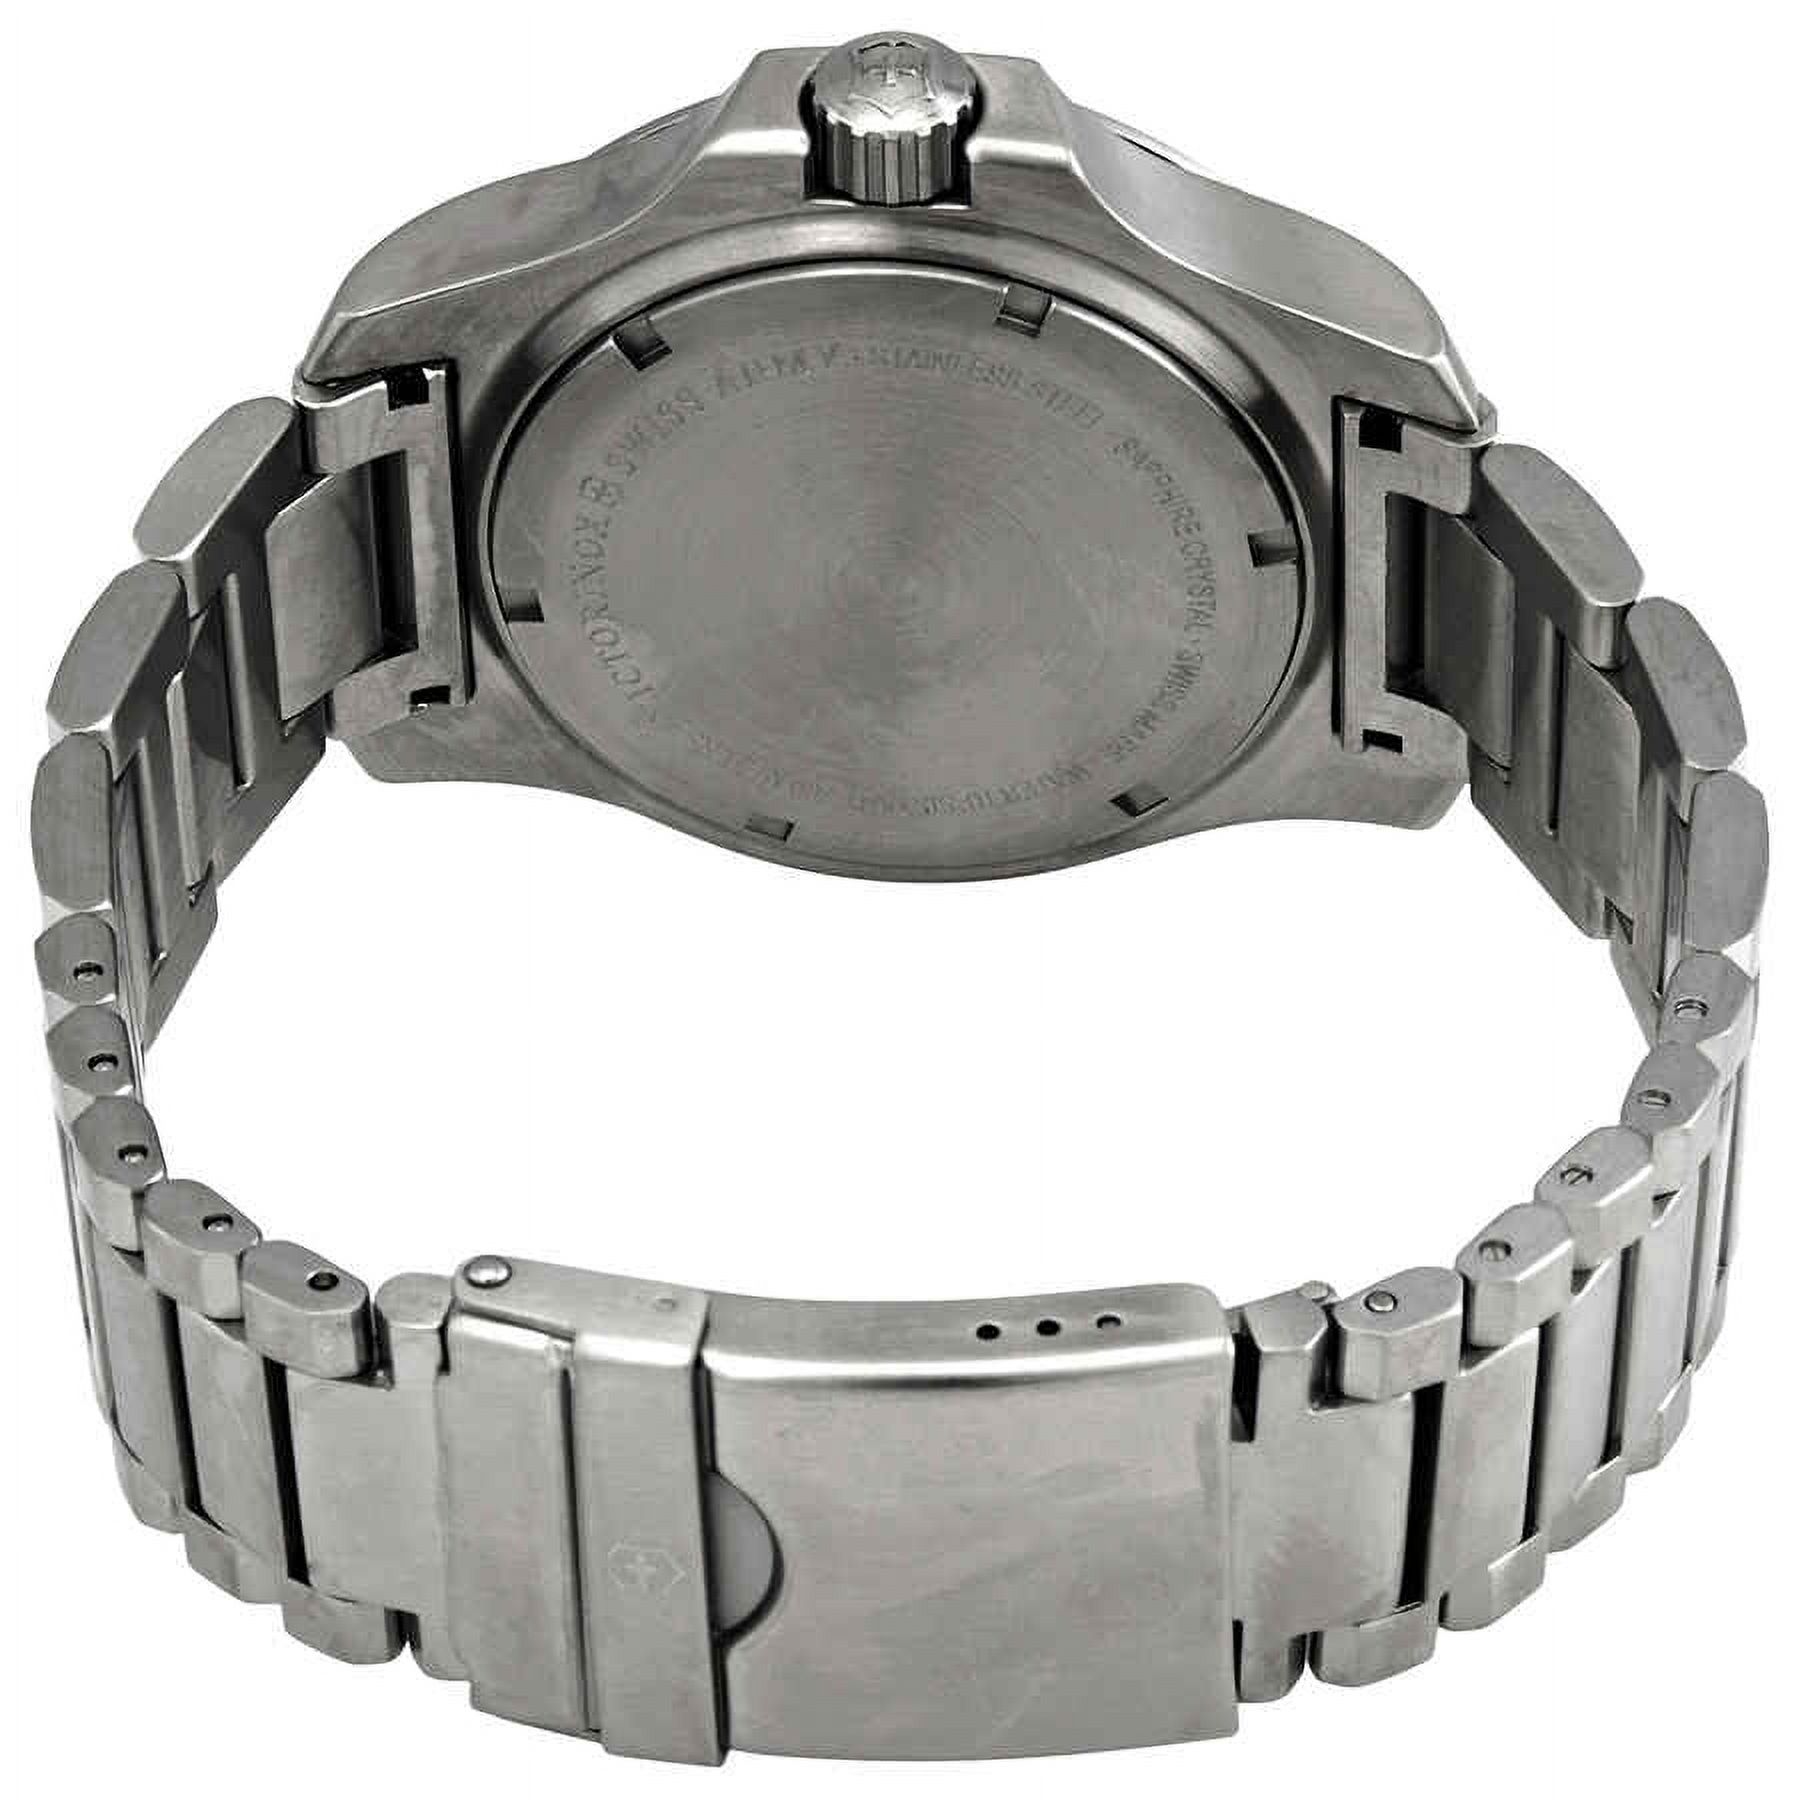 Victorinox Mens INOX Watch - Stainless - Bracelet - Grey Dial - 200m - image 3 of 3